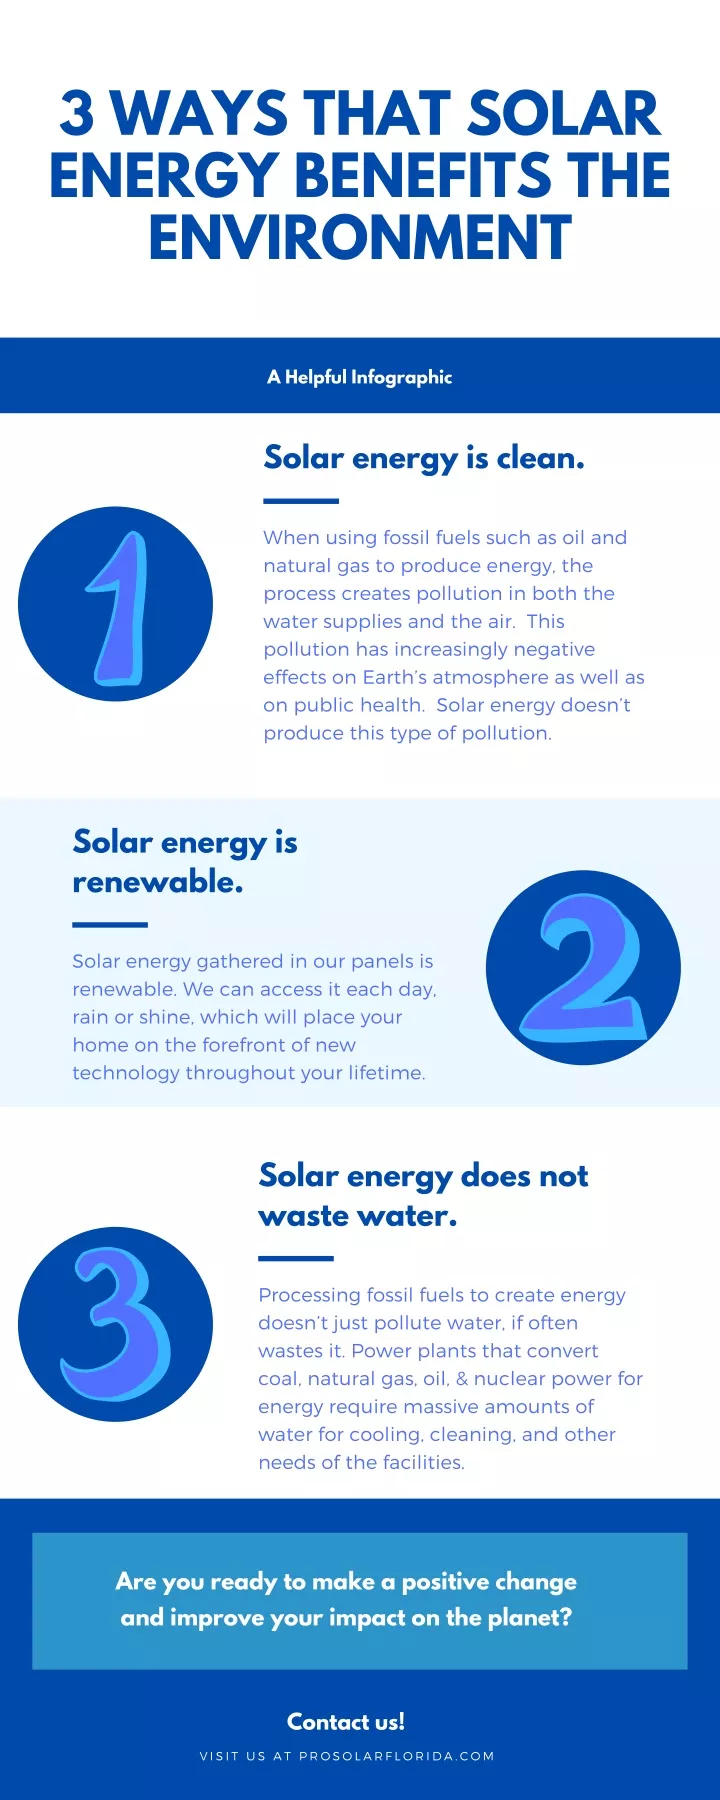 3 ways that solar energy benefits the environment